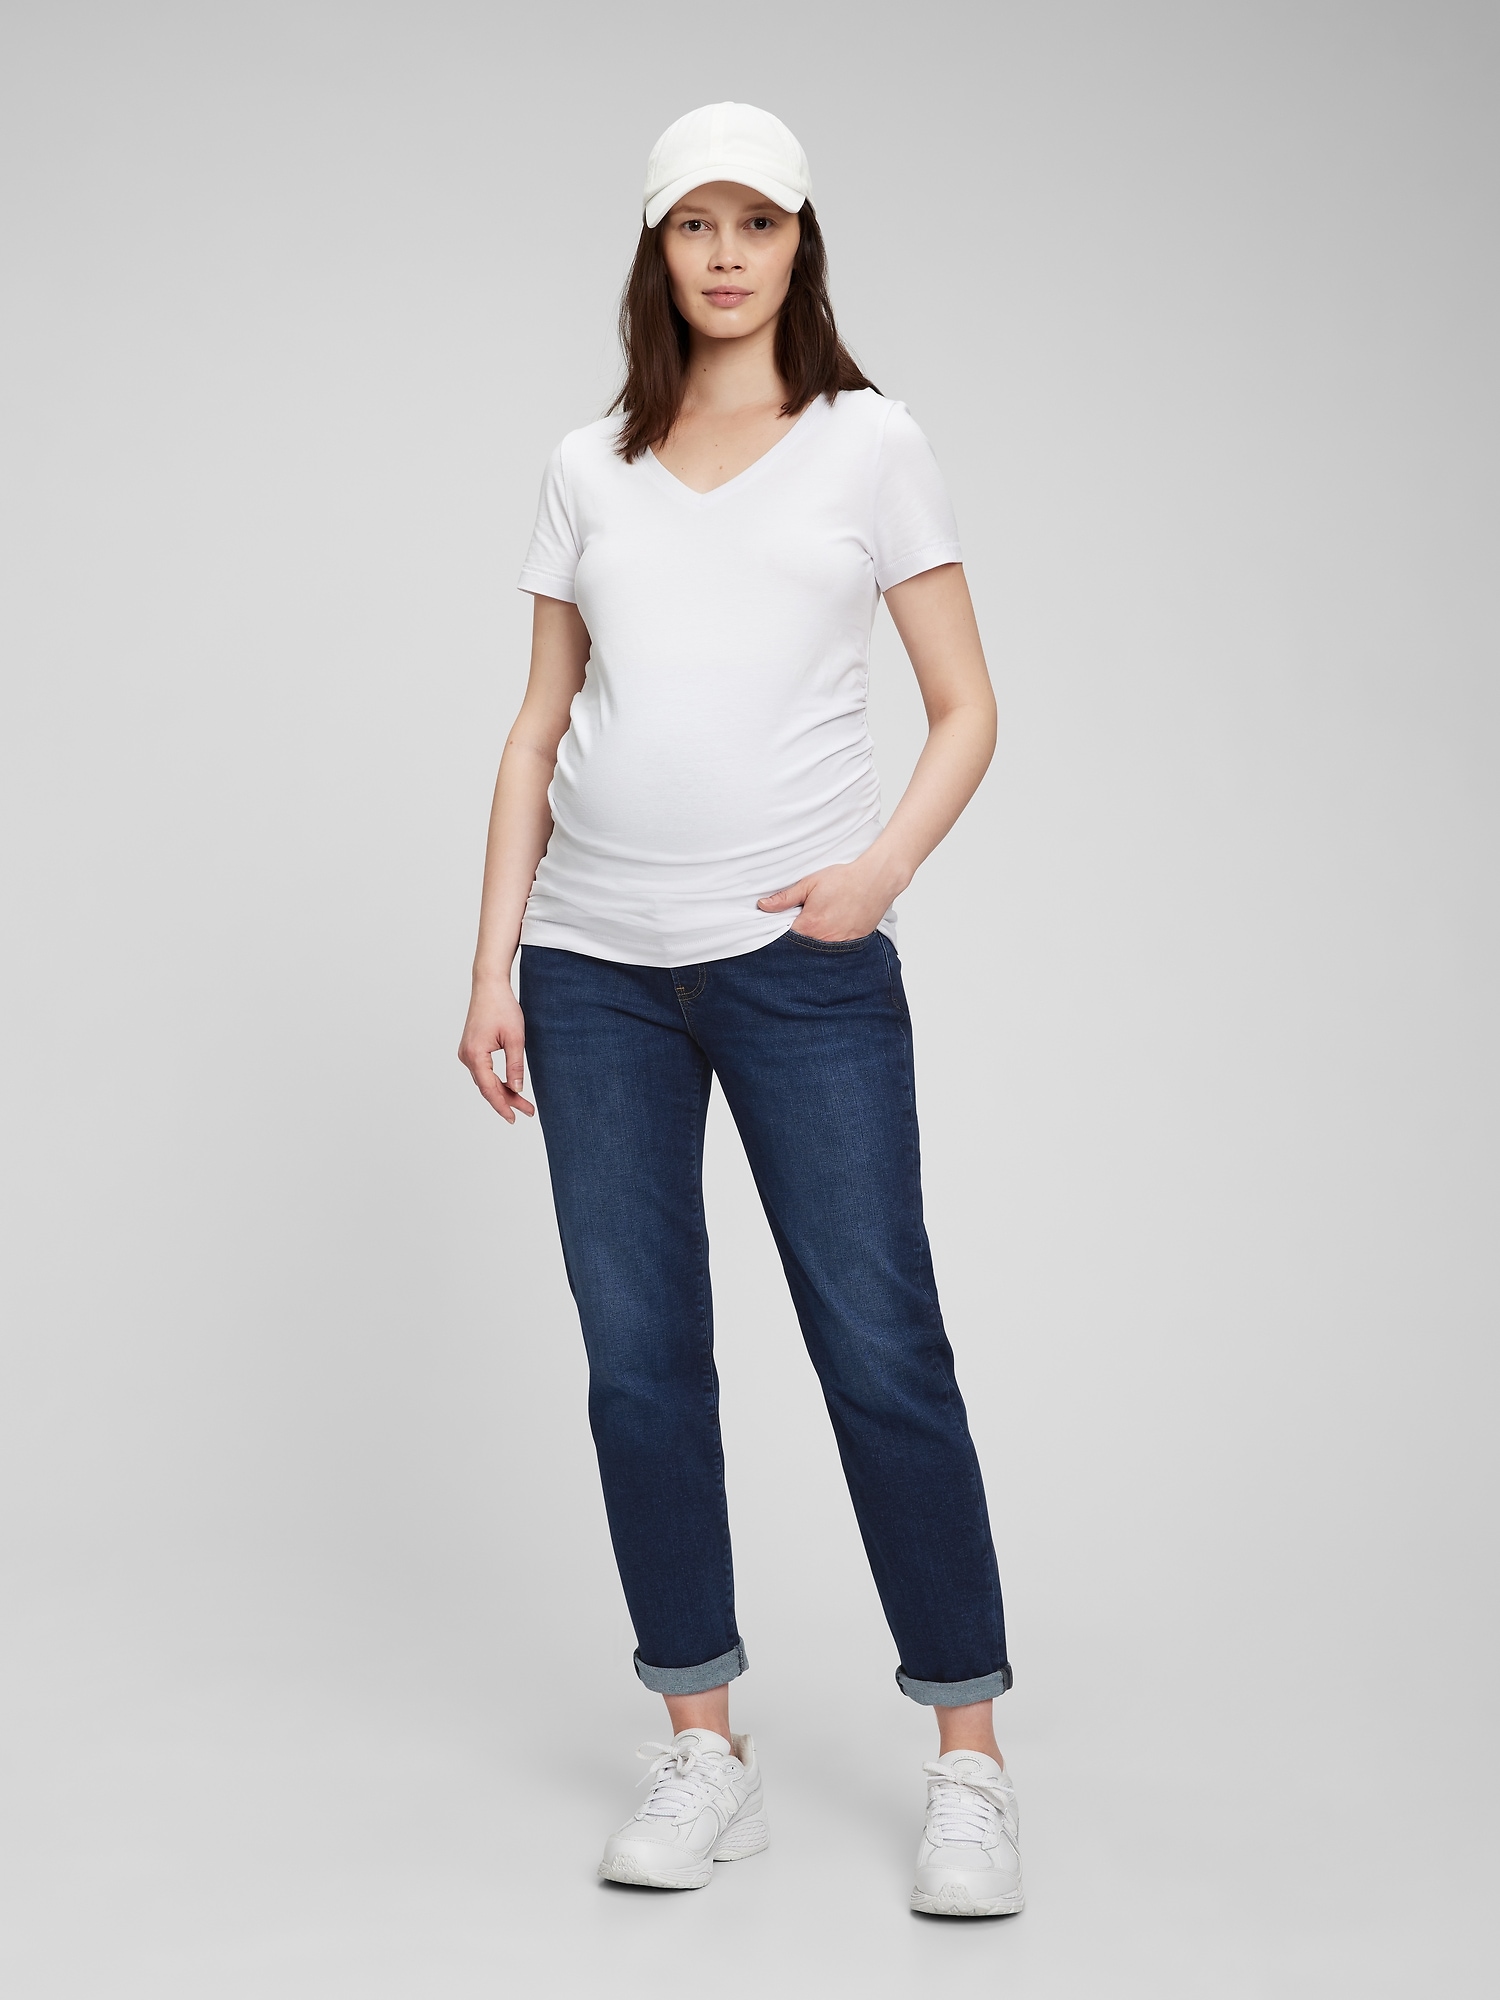 Gap Maternity True Waistband Full Panel Girlfriend Jeans with Washwell